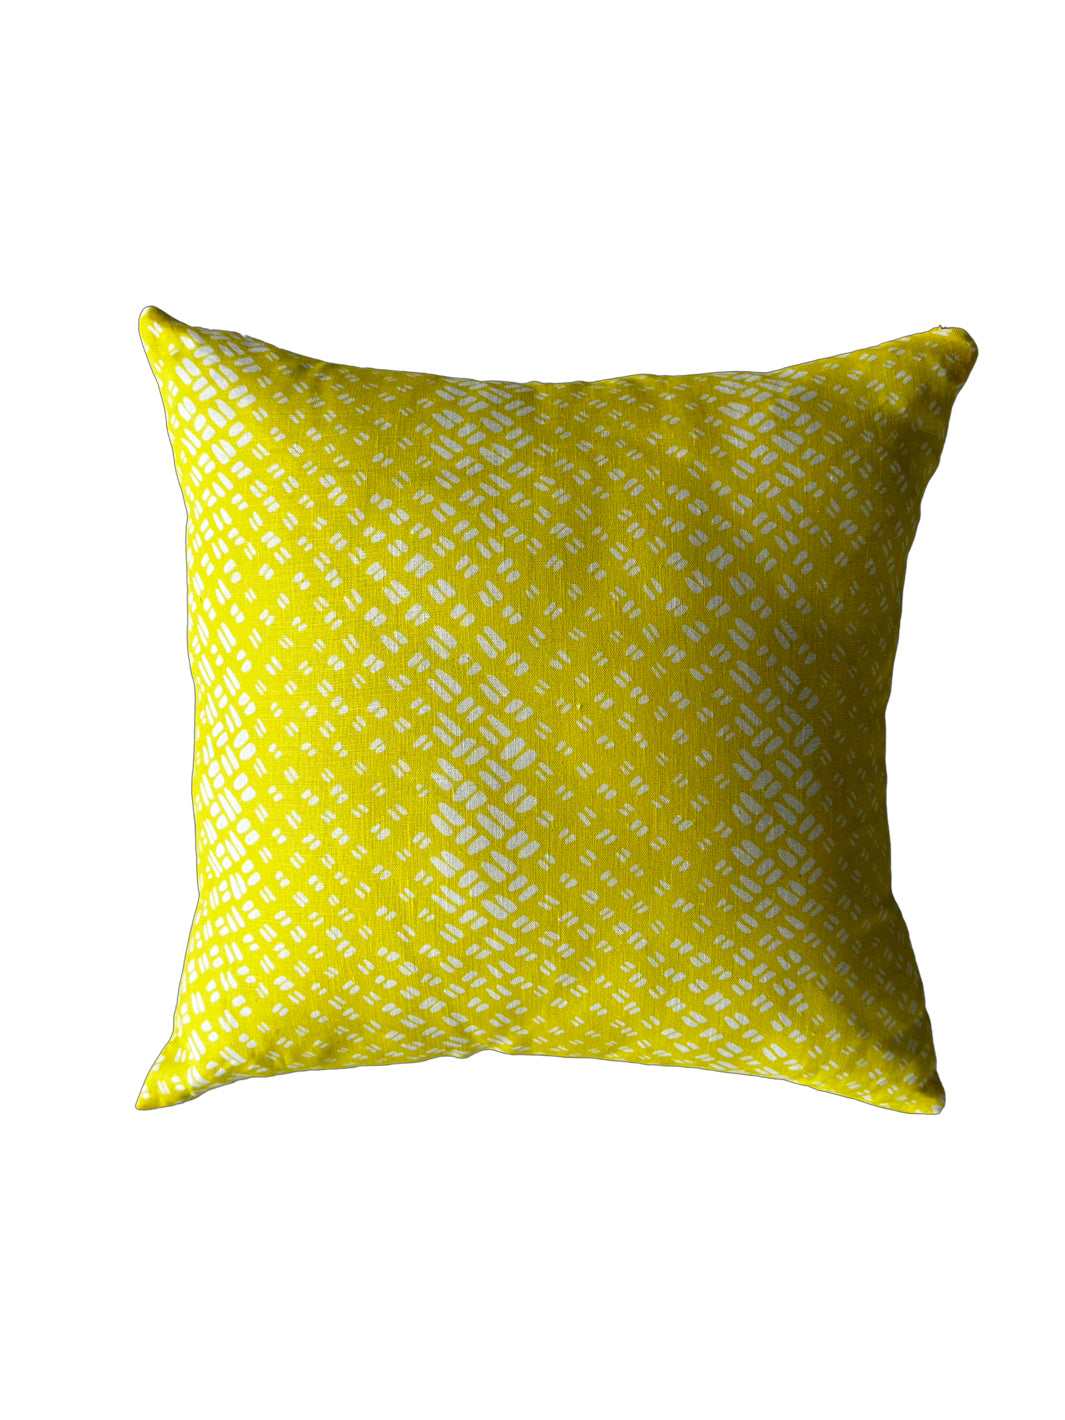 Arroz Yellow Cushion Cover